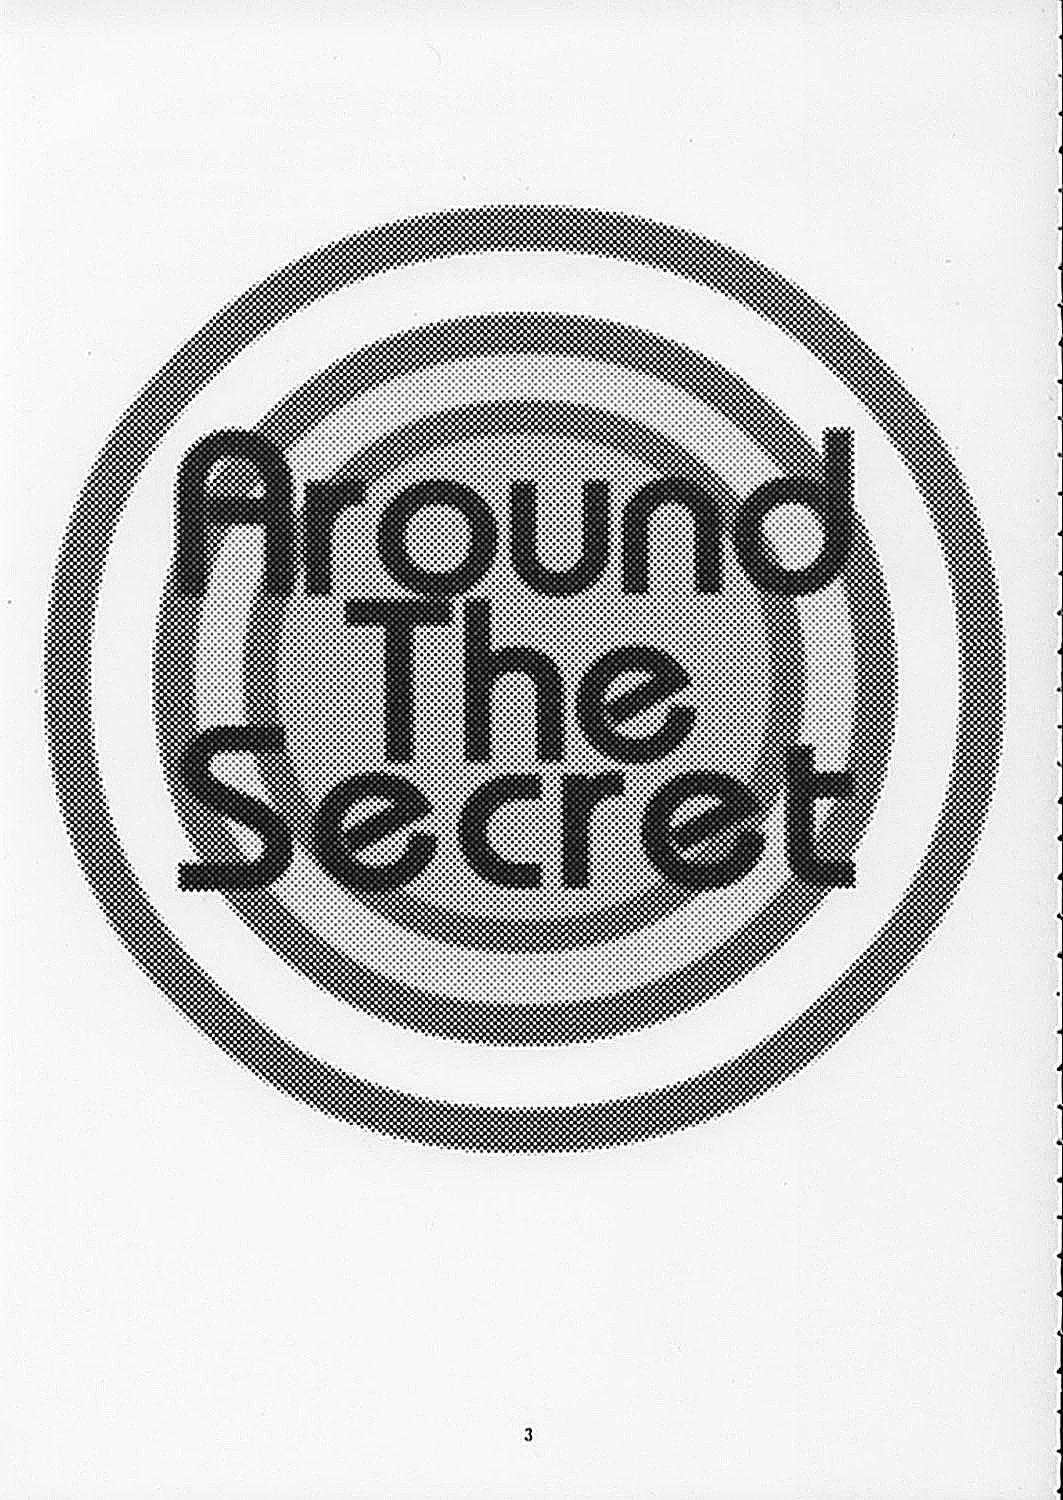 Around The Secret 2